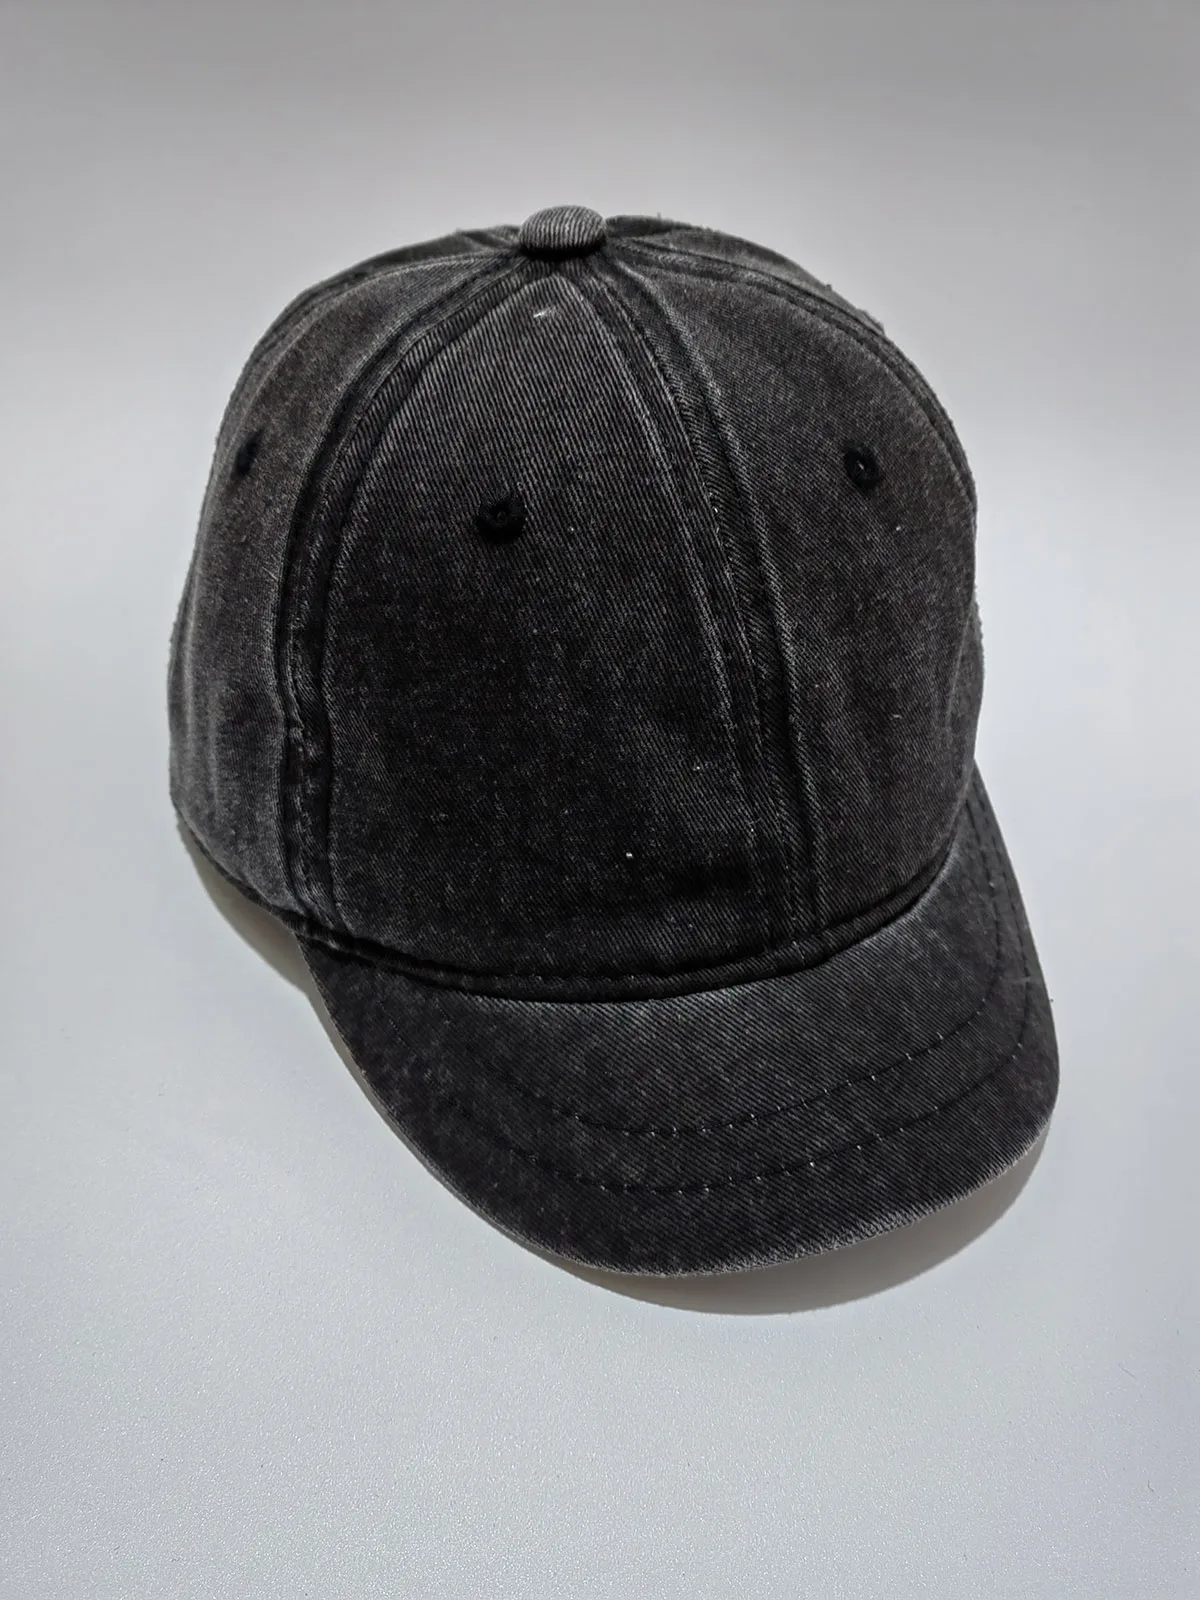 Fashion Black Baseball Cap For Men And Women Cotton Solid Color Snapback Hat Spring Summer Soft Top Sun Short Visor Cap Unisex